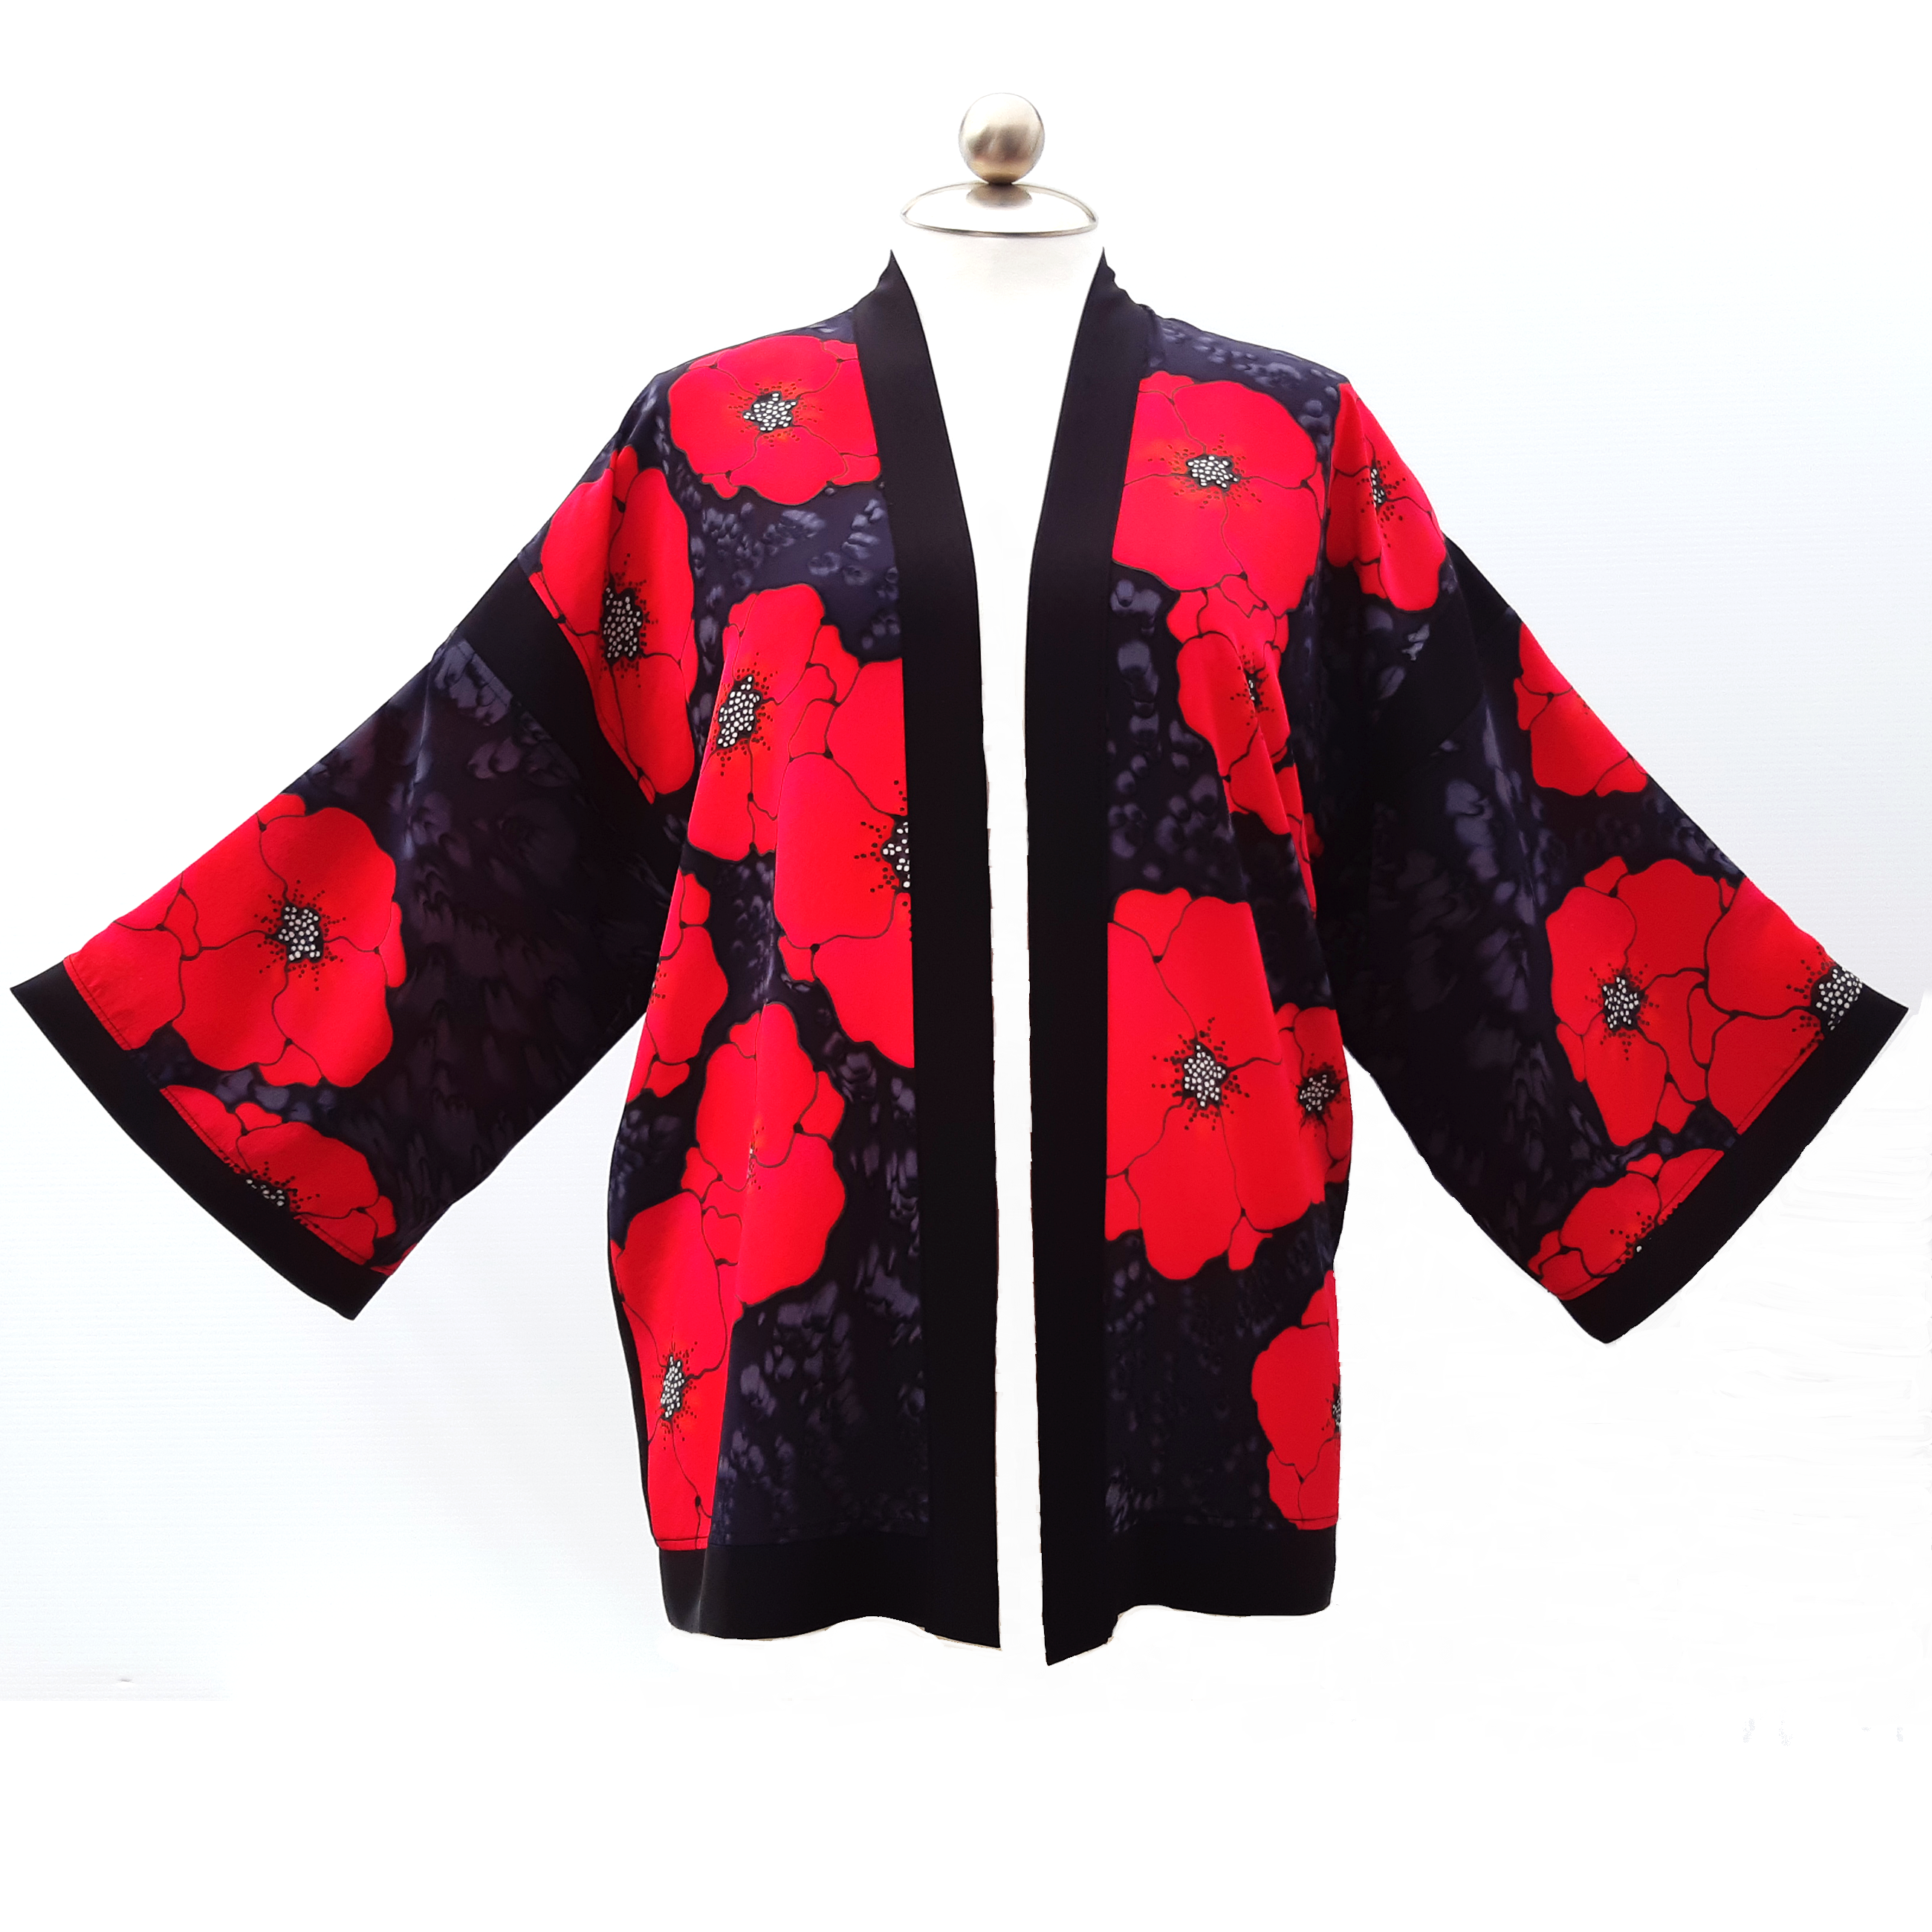 Hand painted silk clothing Kimono jacket handmade in Canada by Lynne Kiel